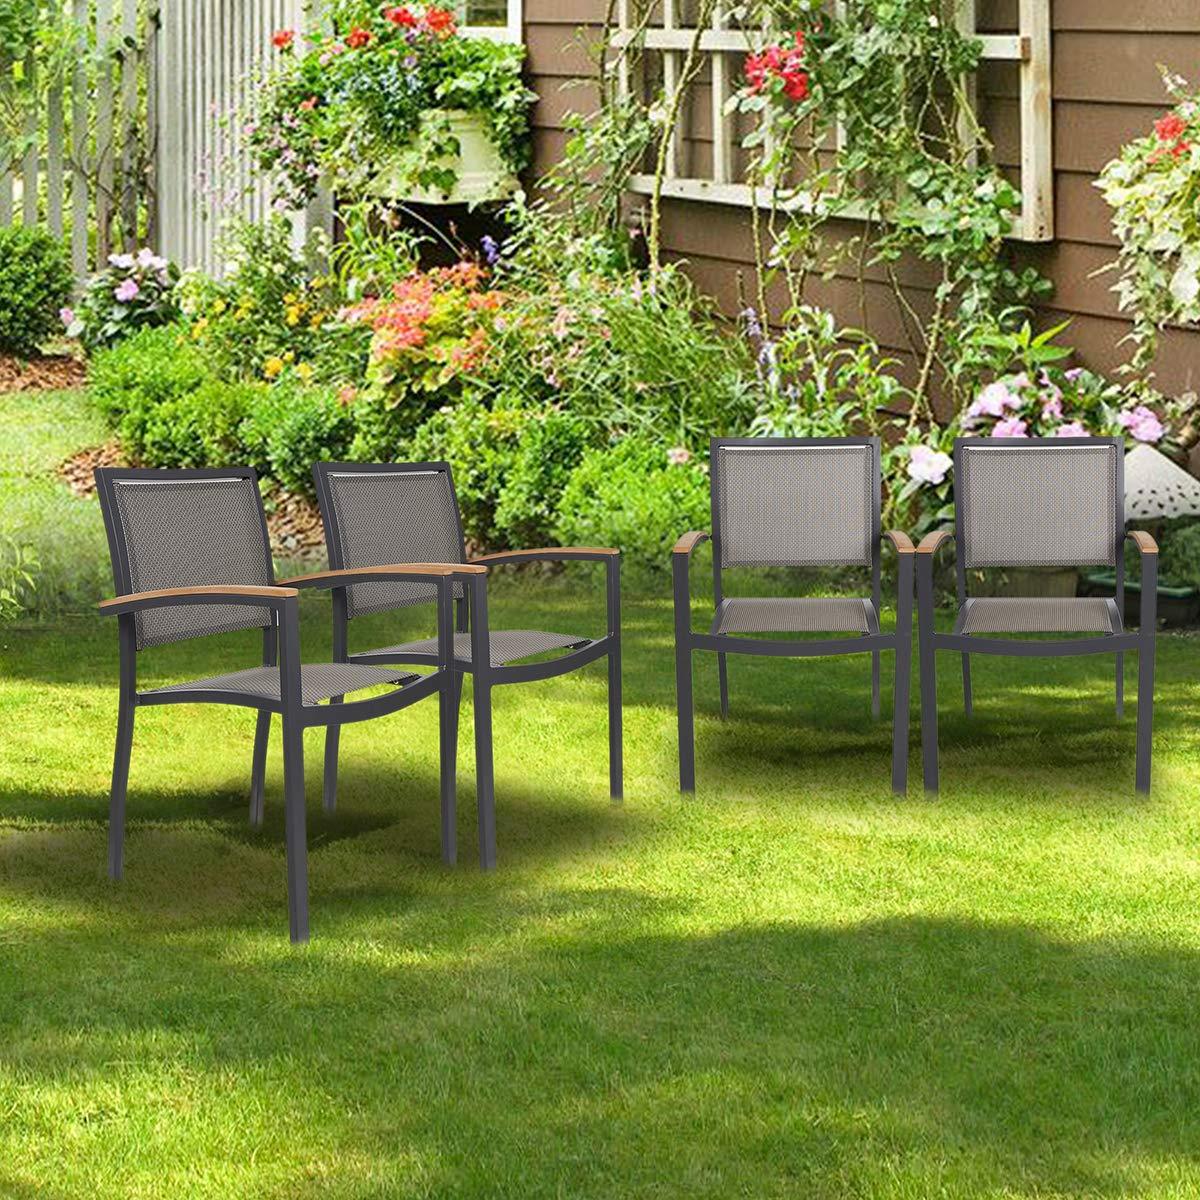 Bosonshop Outdoor Patio Dining Chairs with Teak Armrest,Textilene Mesh Fabric Aluminum Frame, Gray